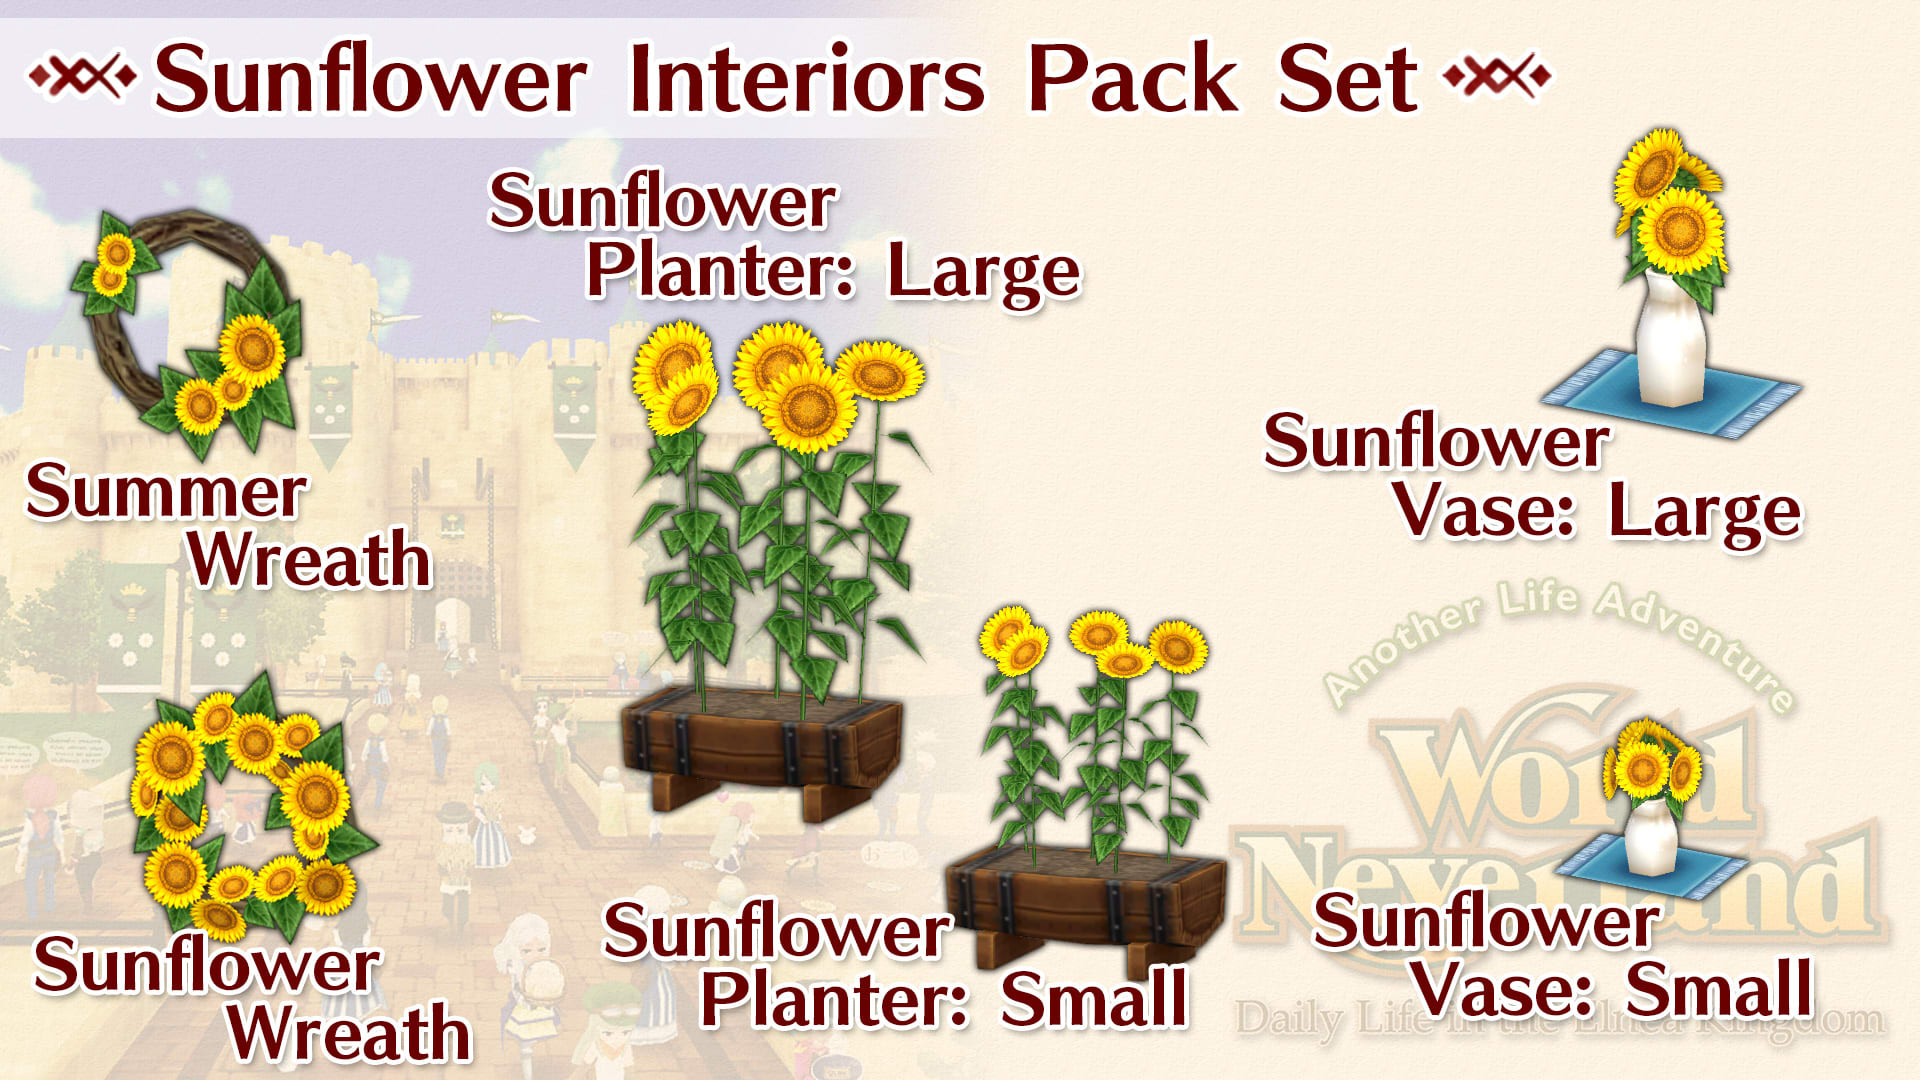 Sunflower Interiors Pack Set